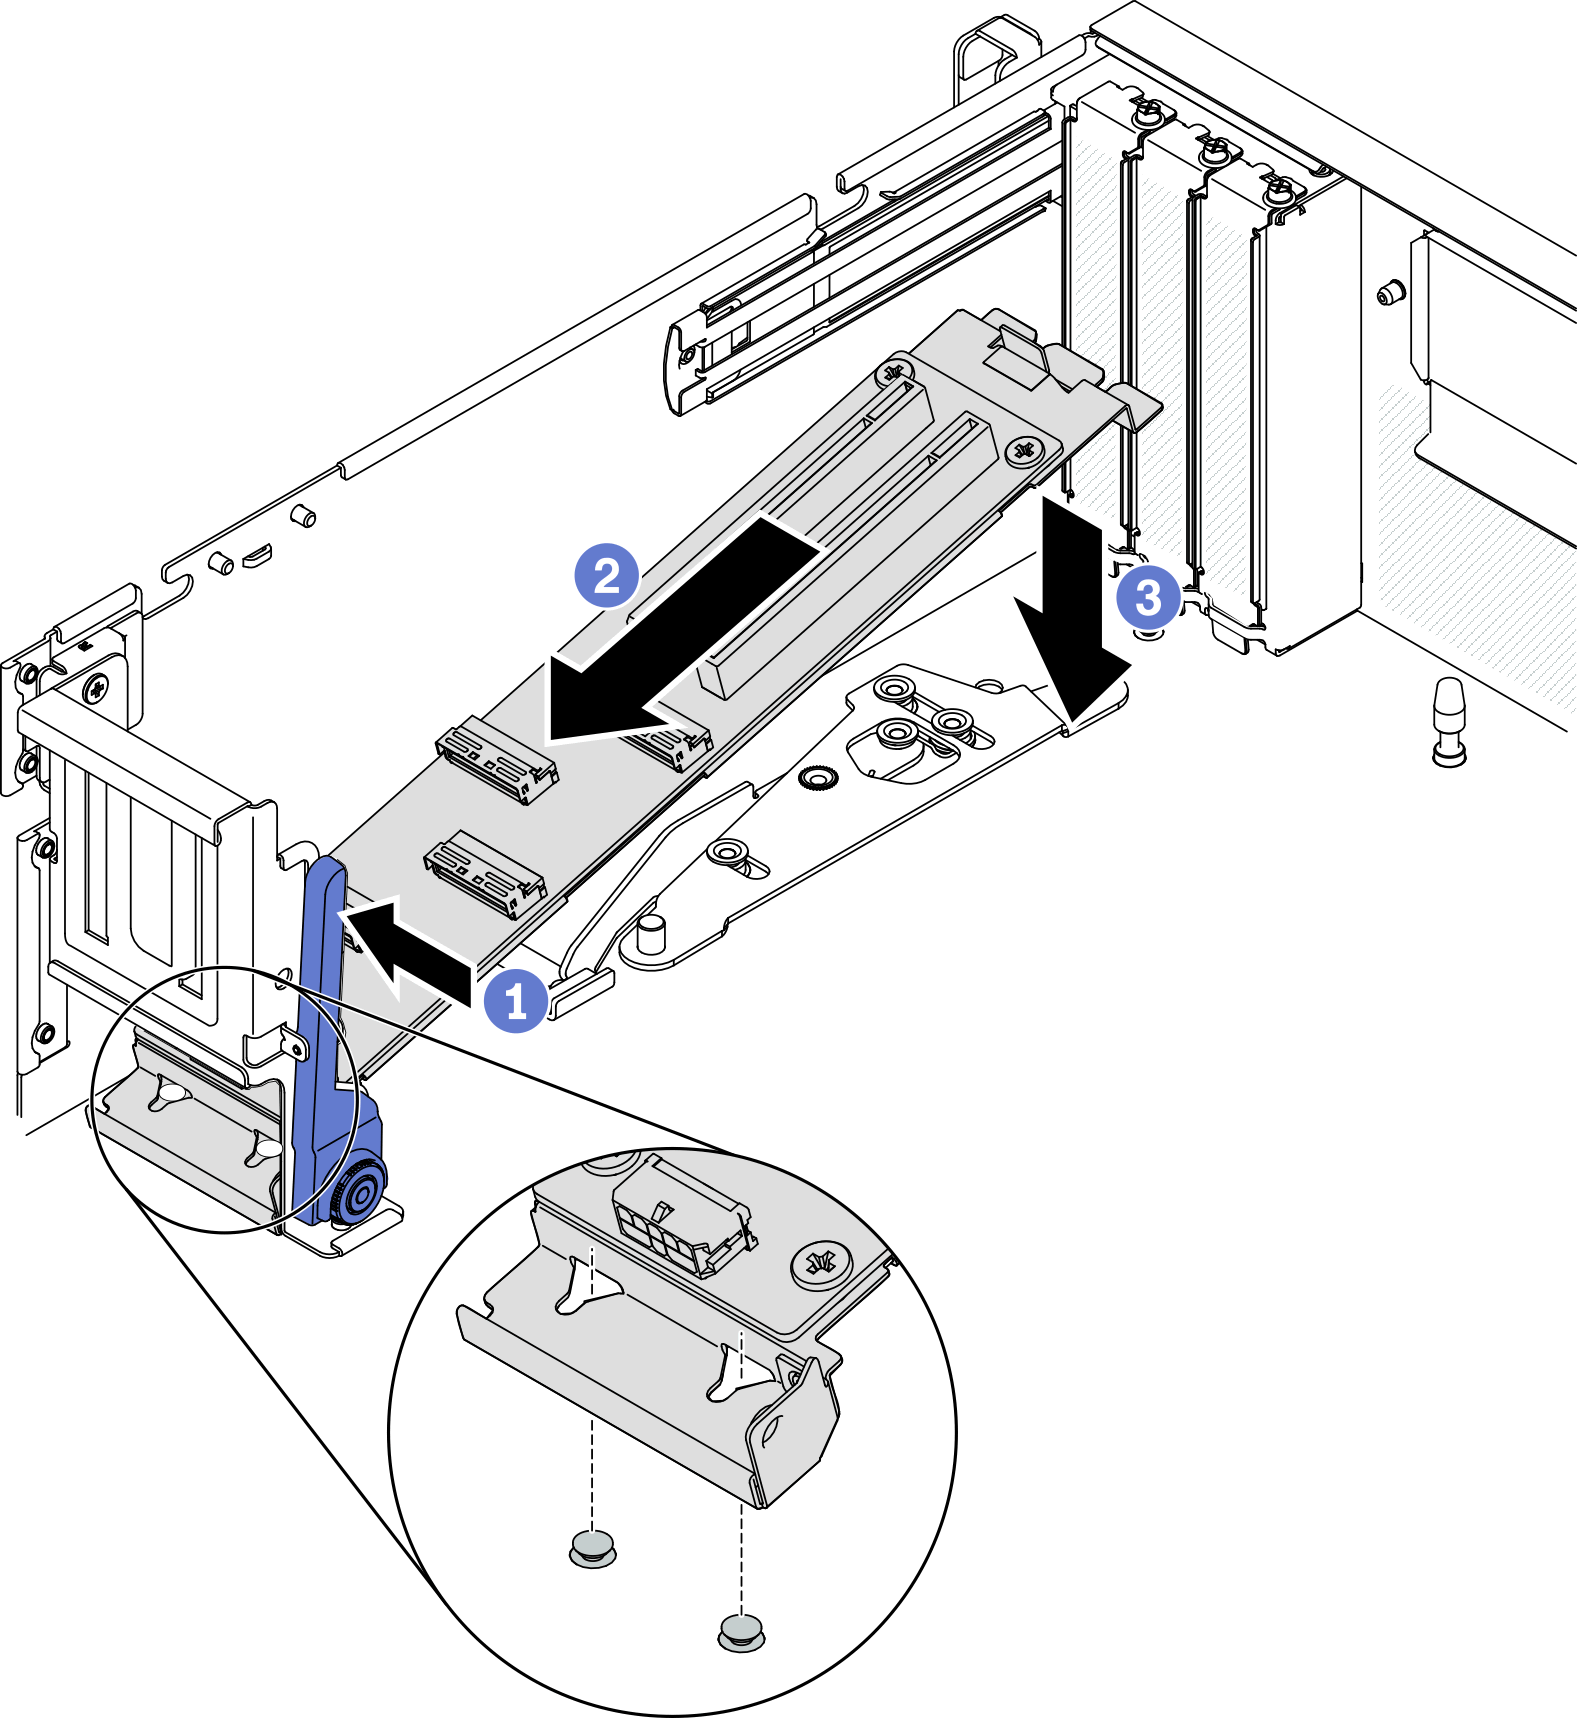 Placing the módulo de la placa de expansión de E/S frontal into the chassis